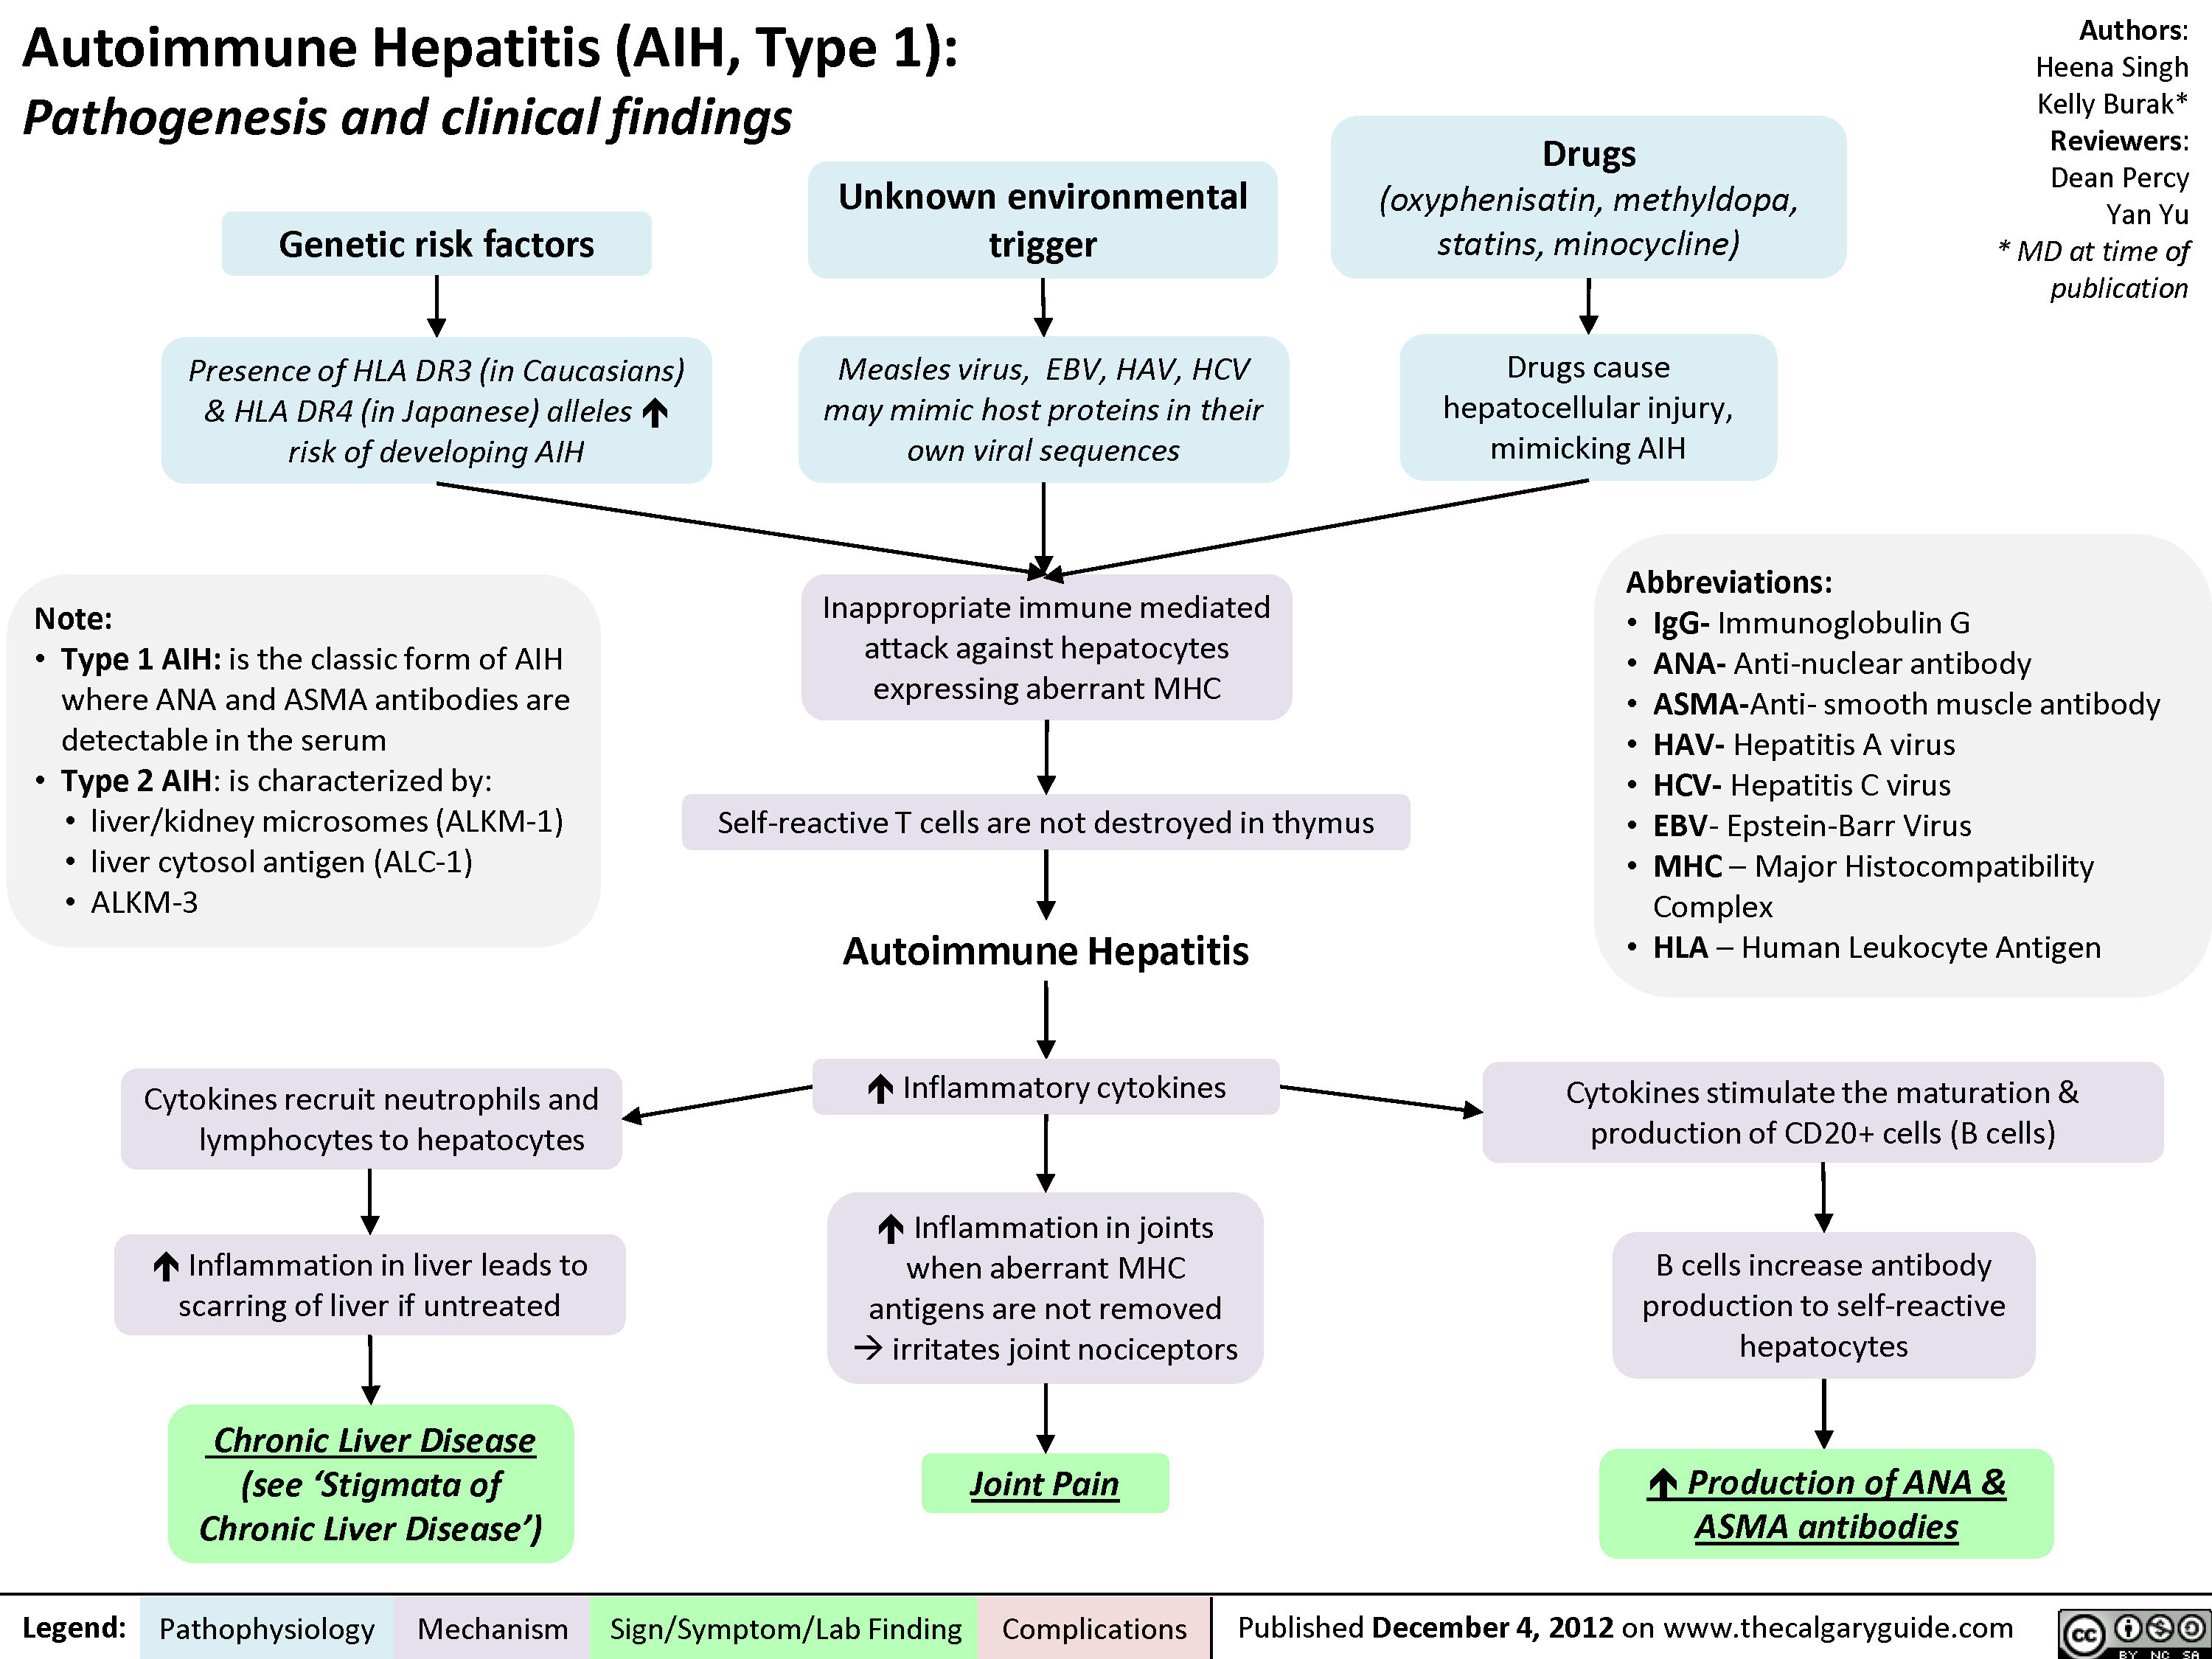 Auto-immune Hepatitis